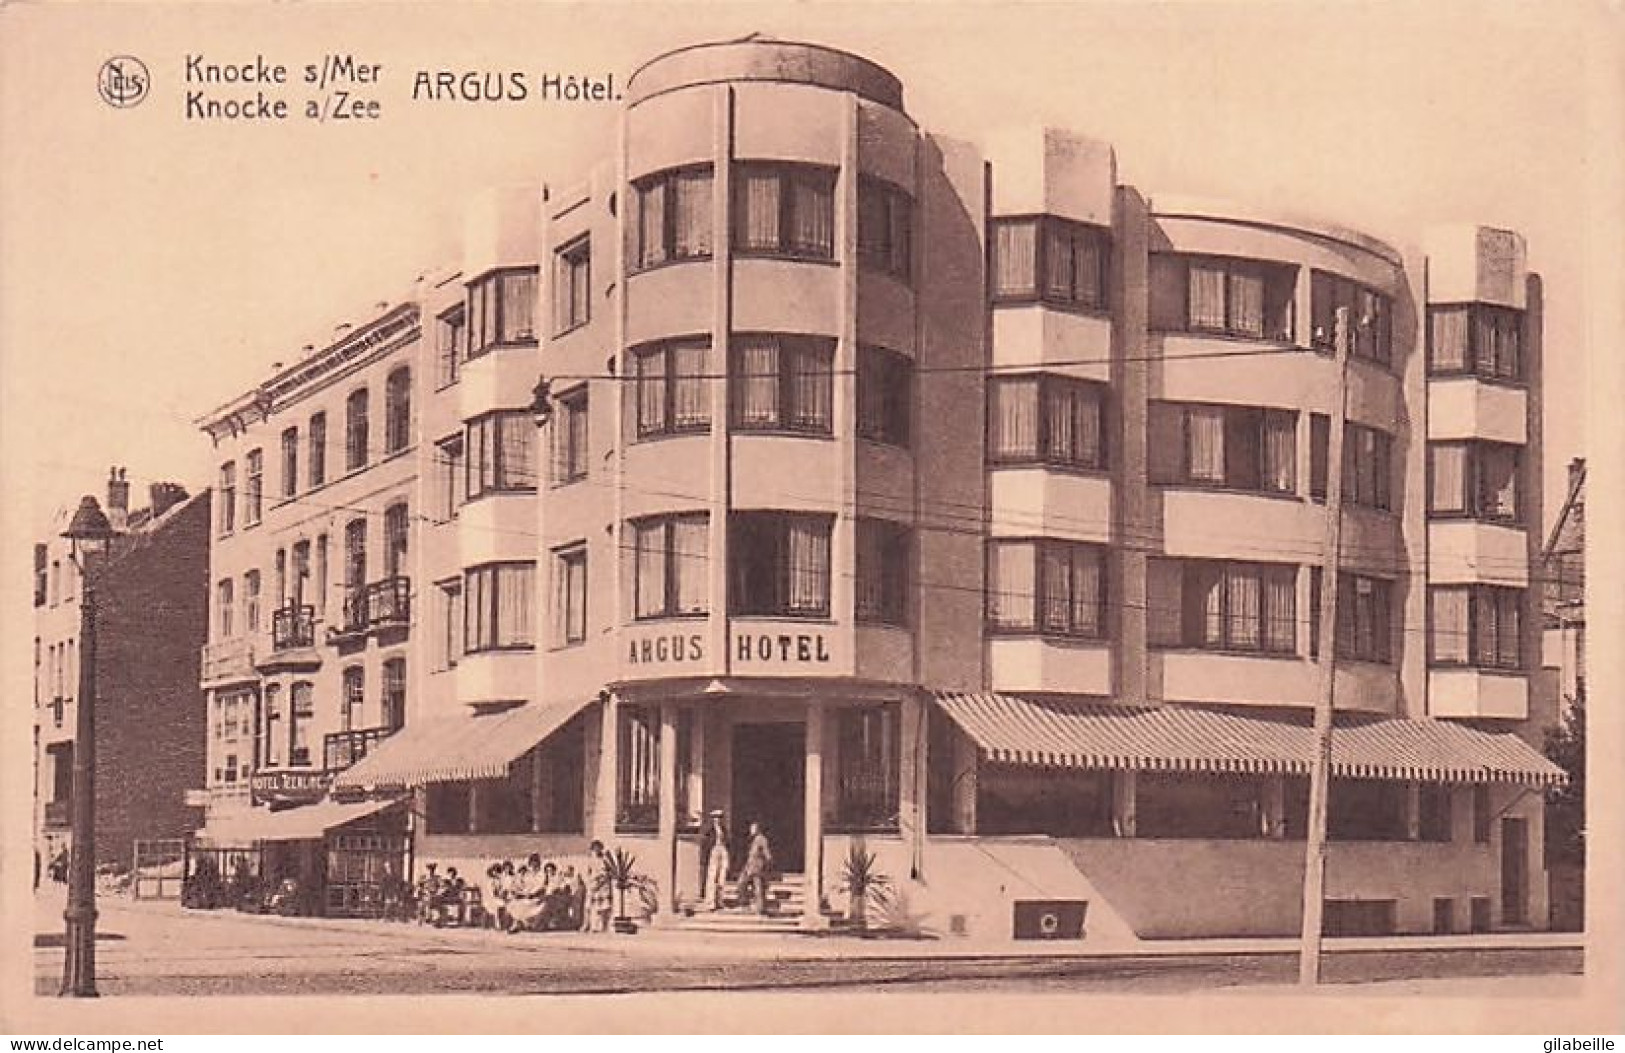 KNOKKE - KNOCKE Sur MER -   Argus Hotel - 23 Avenue Du Littoral - Knokke